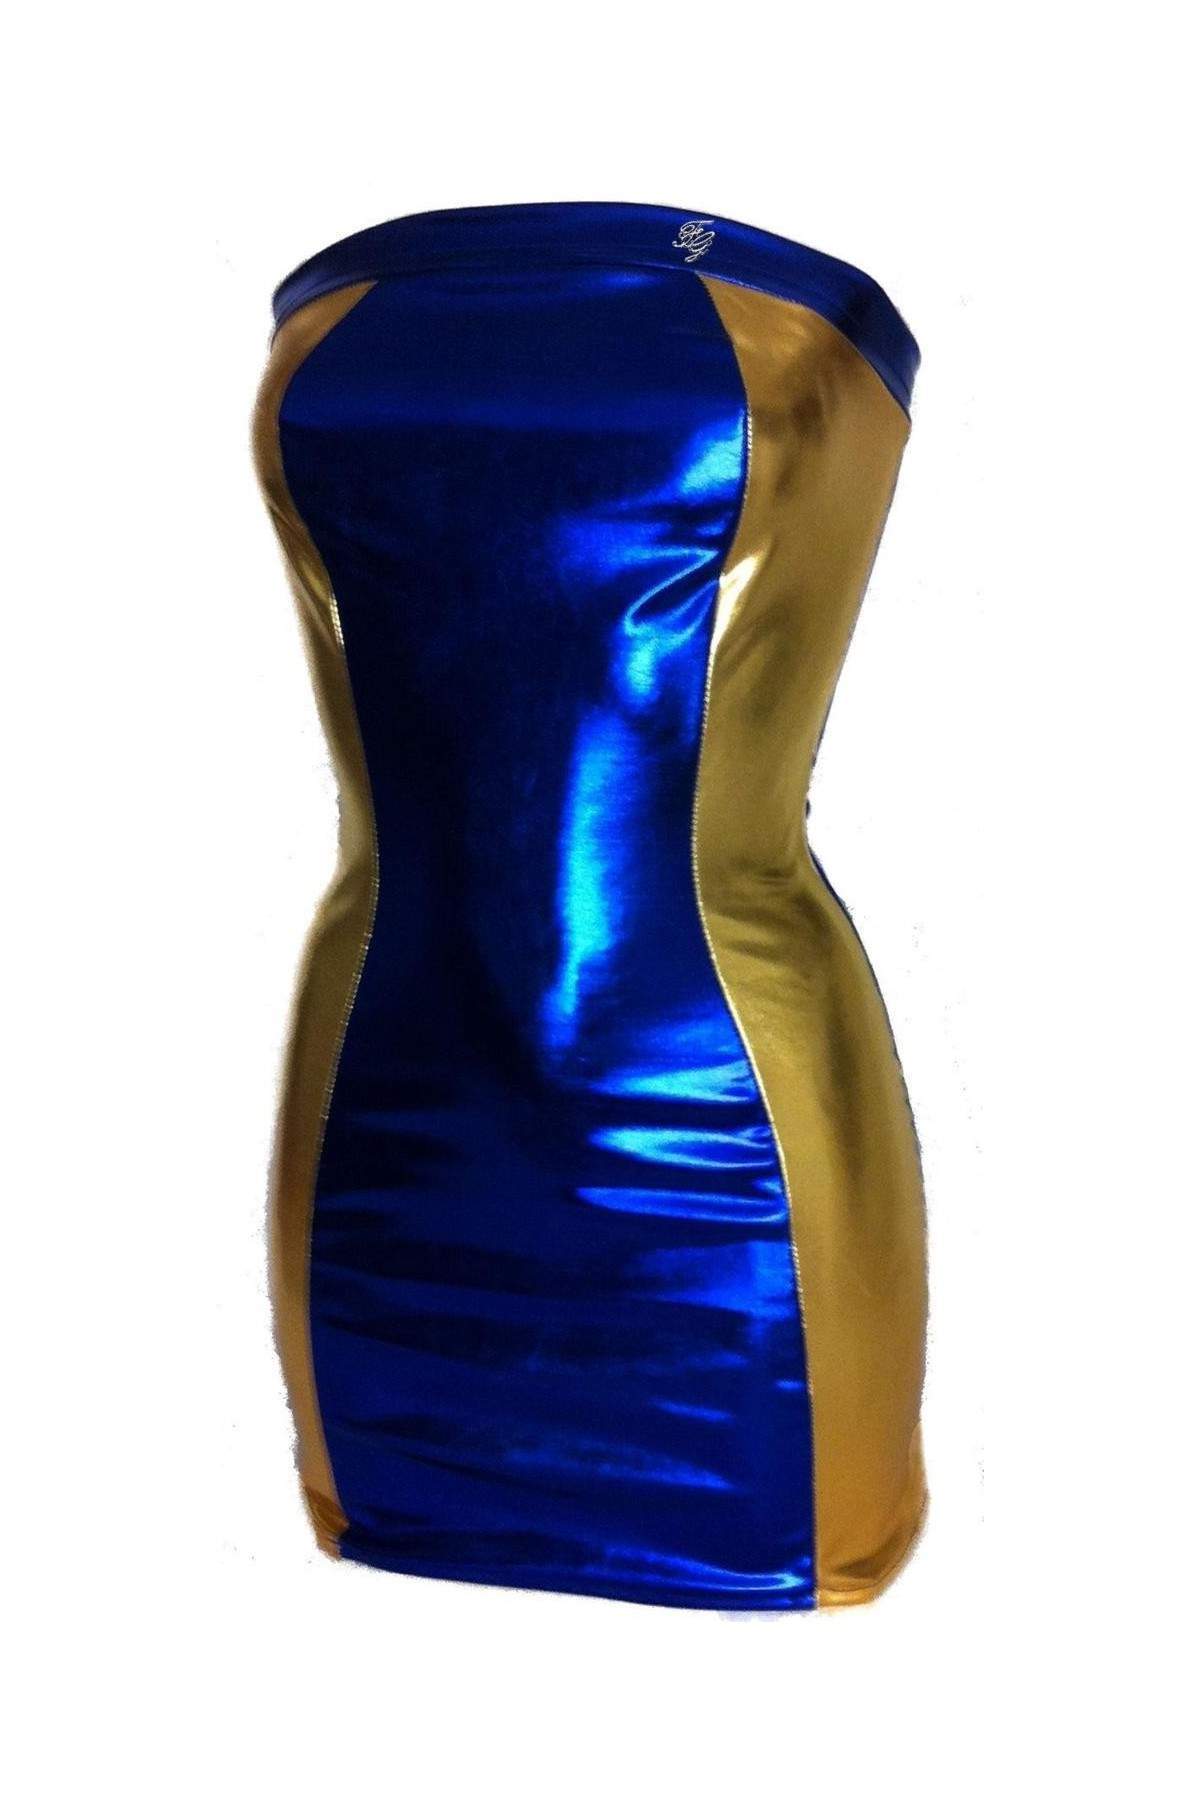 Extravagantes Leder-Optik Kleid blau gold Metalleffekt - Rabatt